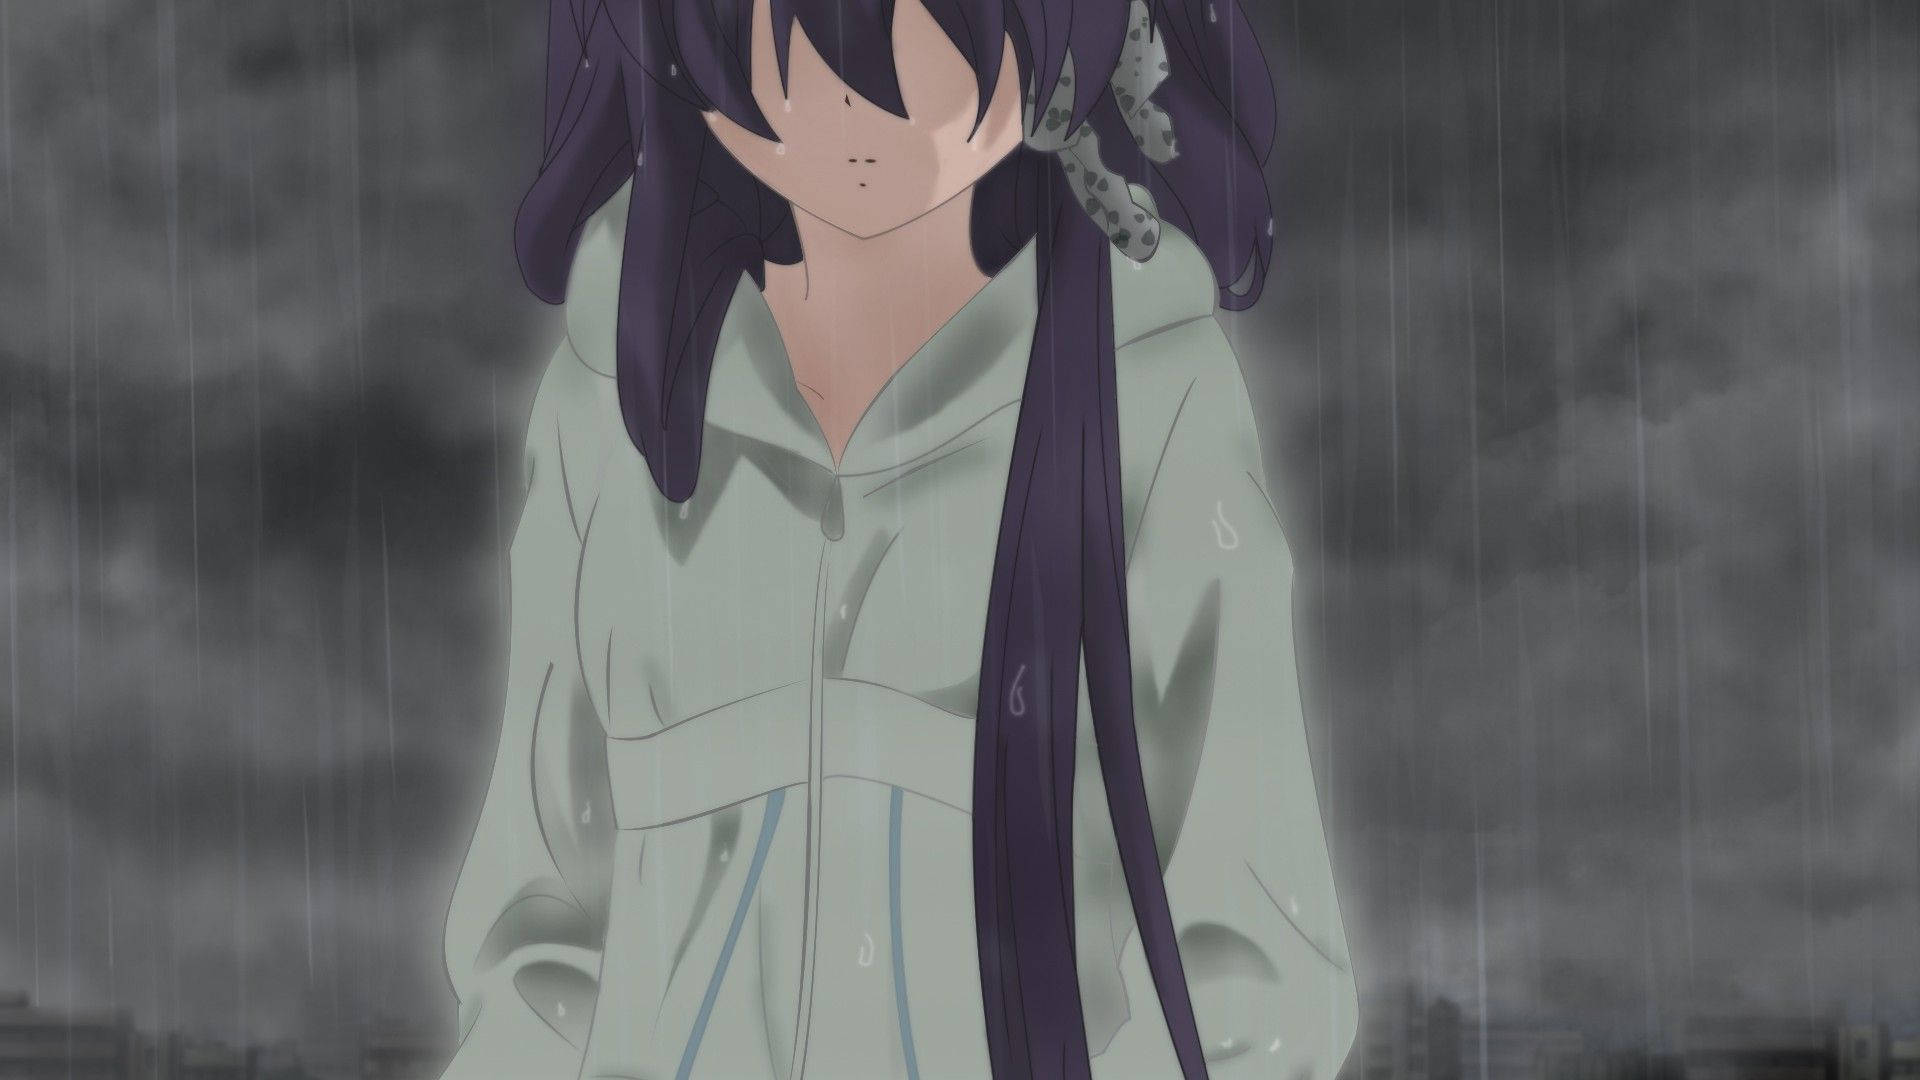 Imágenes De Chica De Anime Deprimida